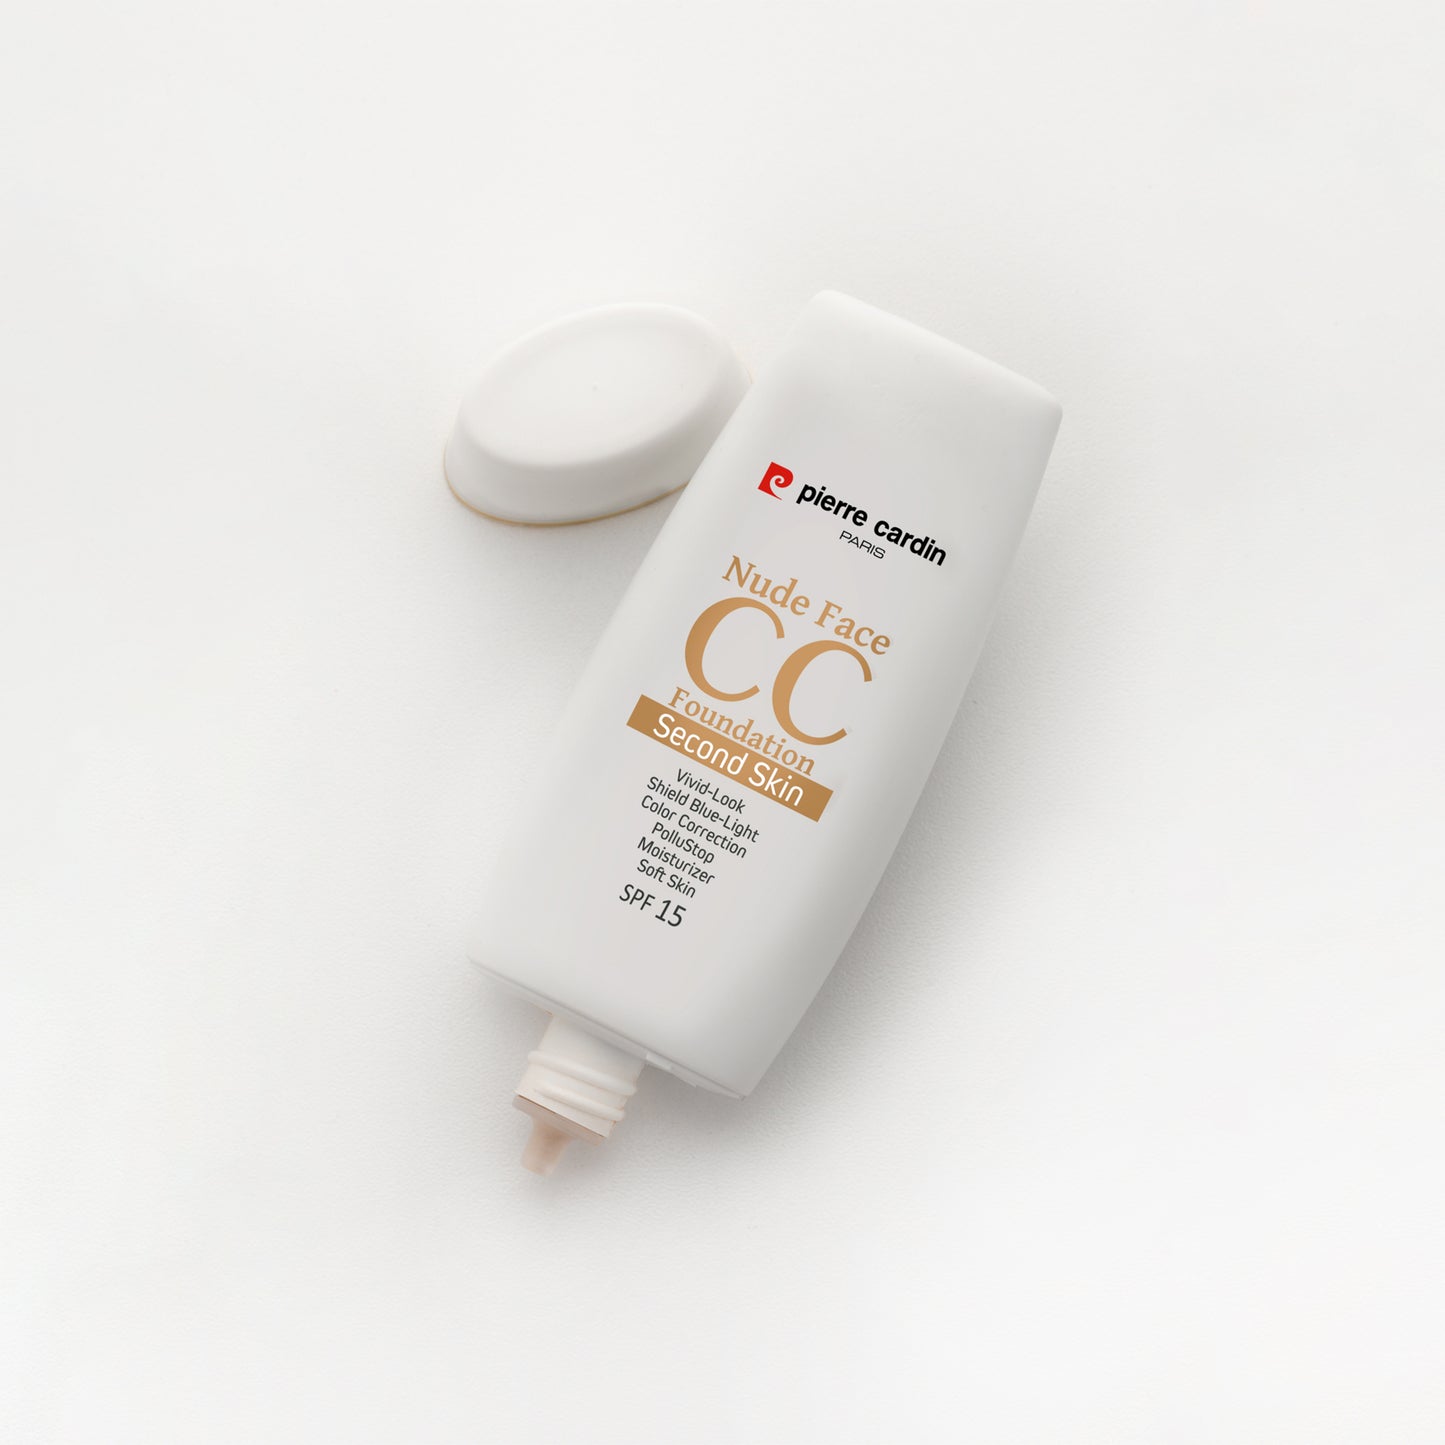 Pierre Cardin CC Cream (spf 15) Porcelain 422 - 30 ml